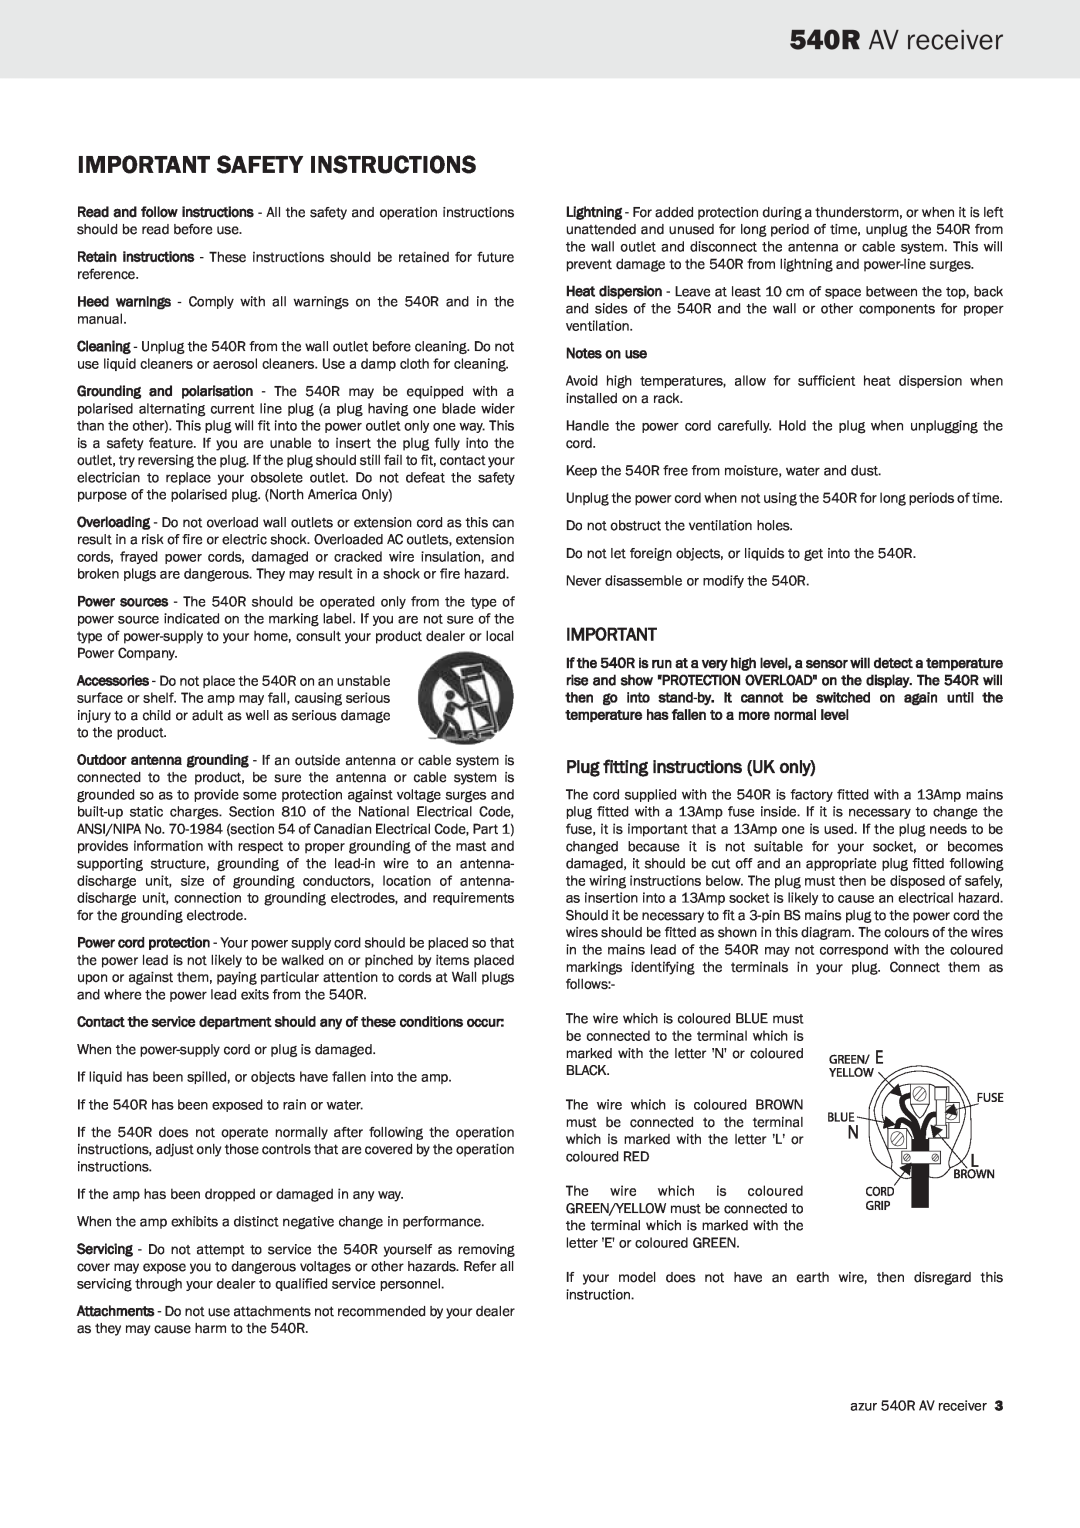 Cambridge Audio important safety instructions 540R AV receiver, Important Safety Instructions, Notes on use 